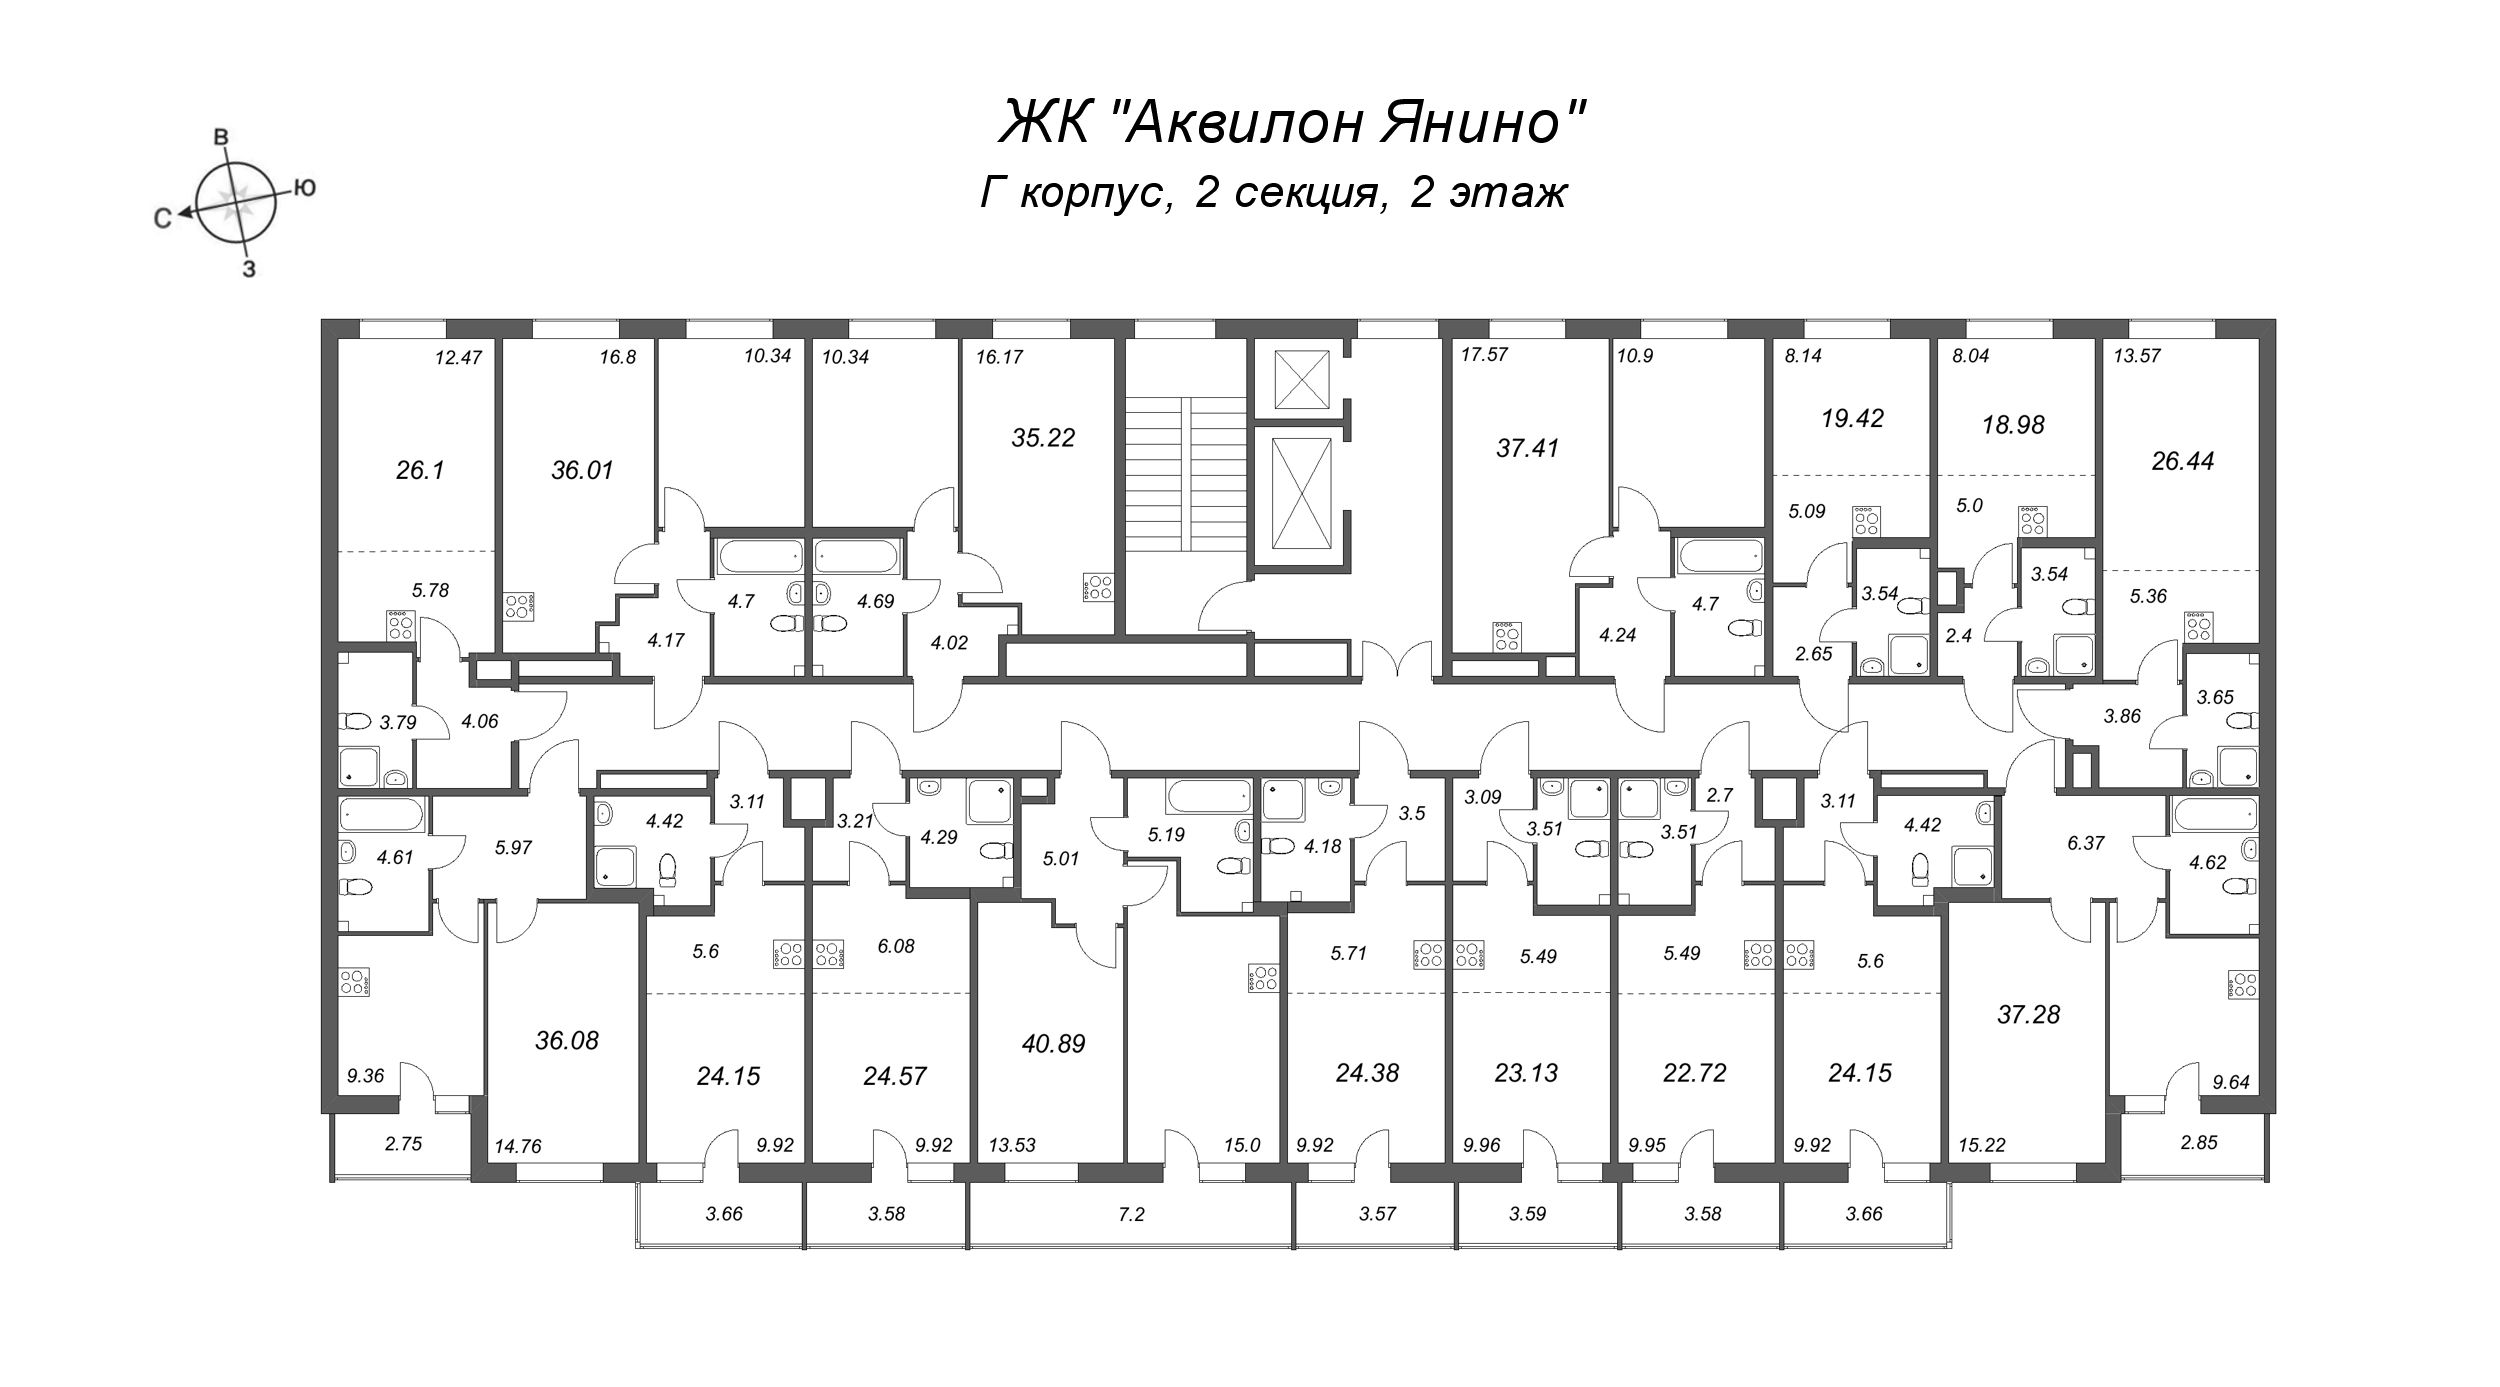 2-комнатная (Евро) квартира, 36.01 м² - планировка этажа